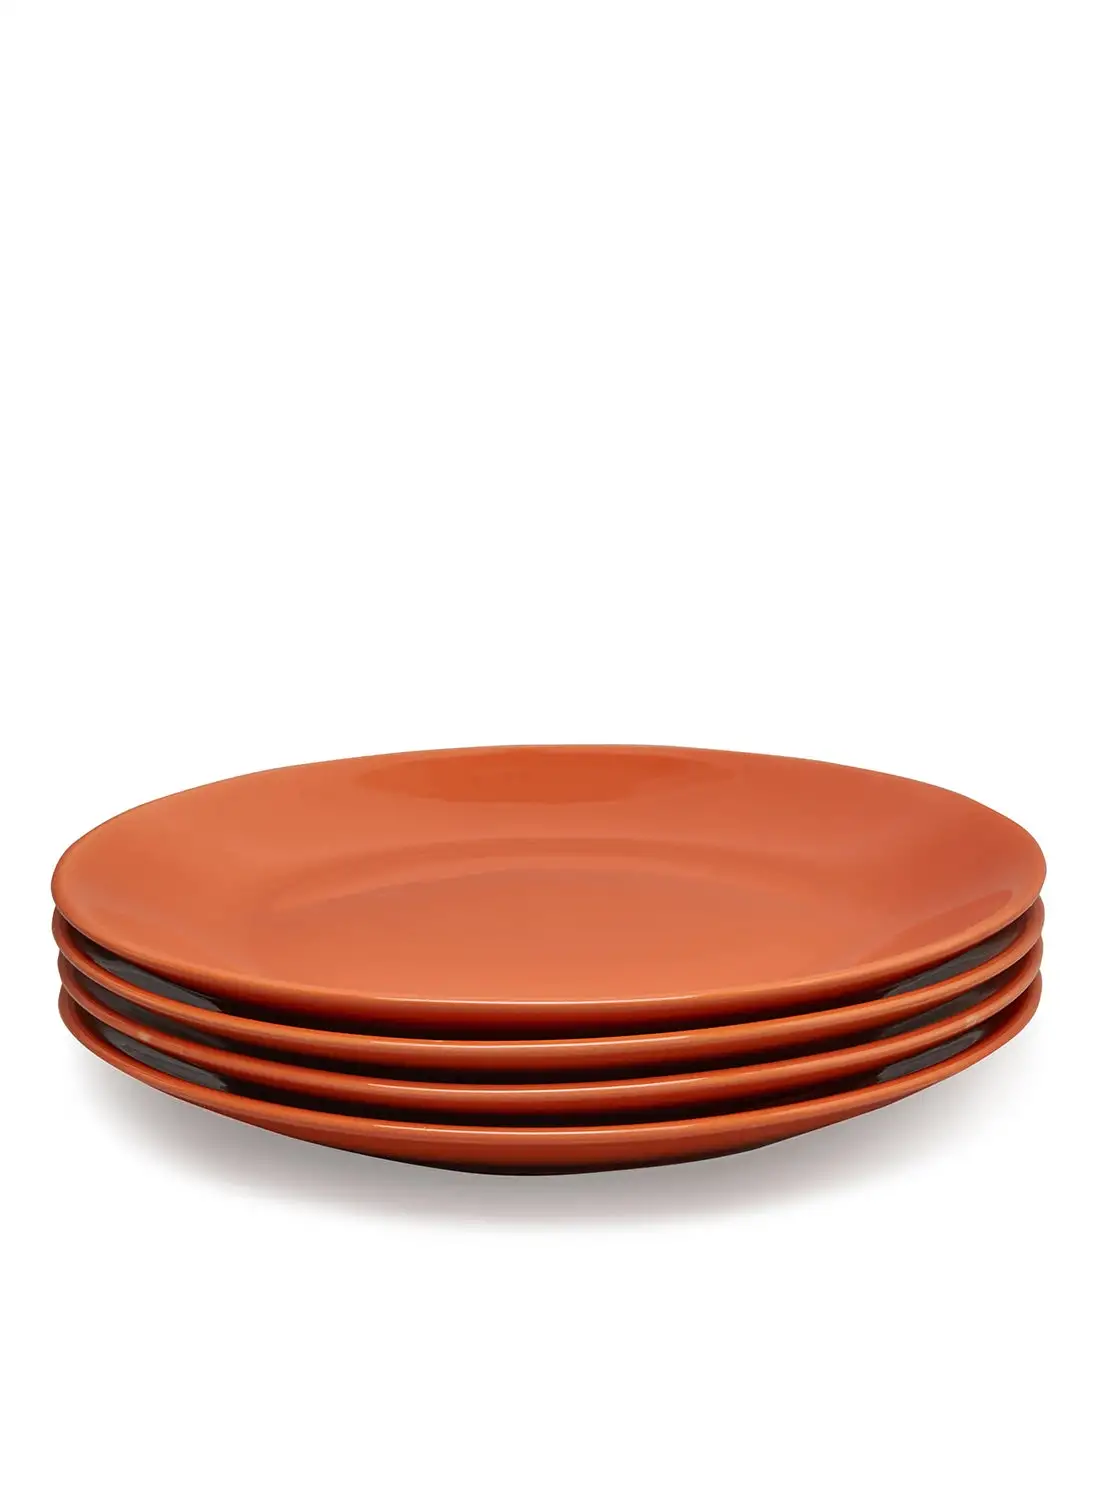 noon east 4 Piece Stoneware Dinner Plates Set - Dishes - Plates - Plate Set - Dinner Set - Ceramic Plate - Dinner Plate - Serves 4 - Rust